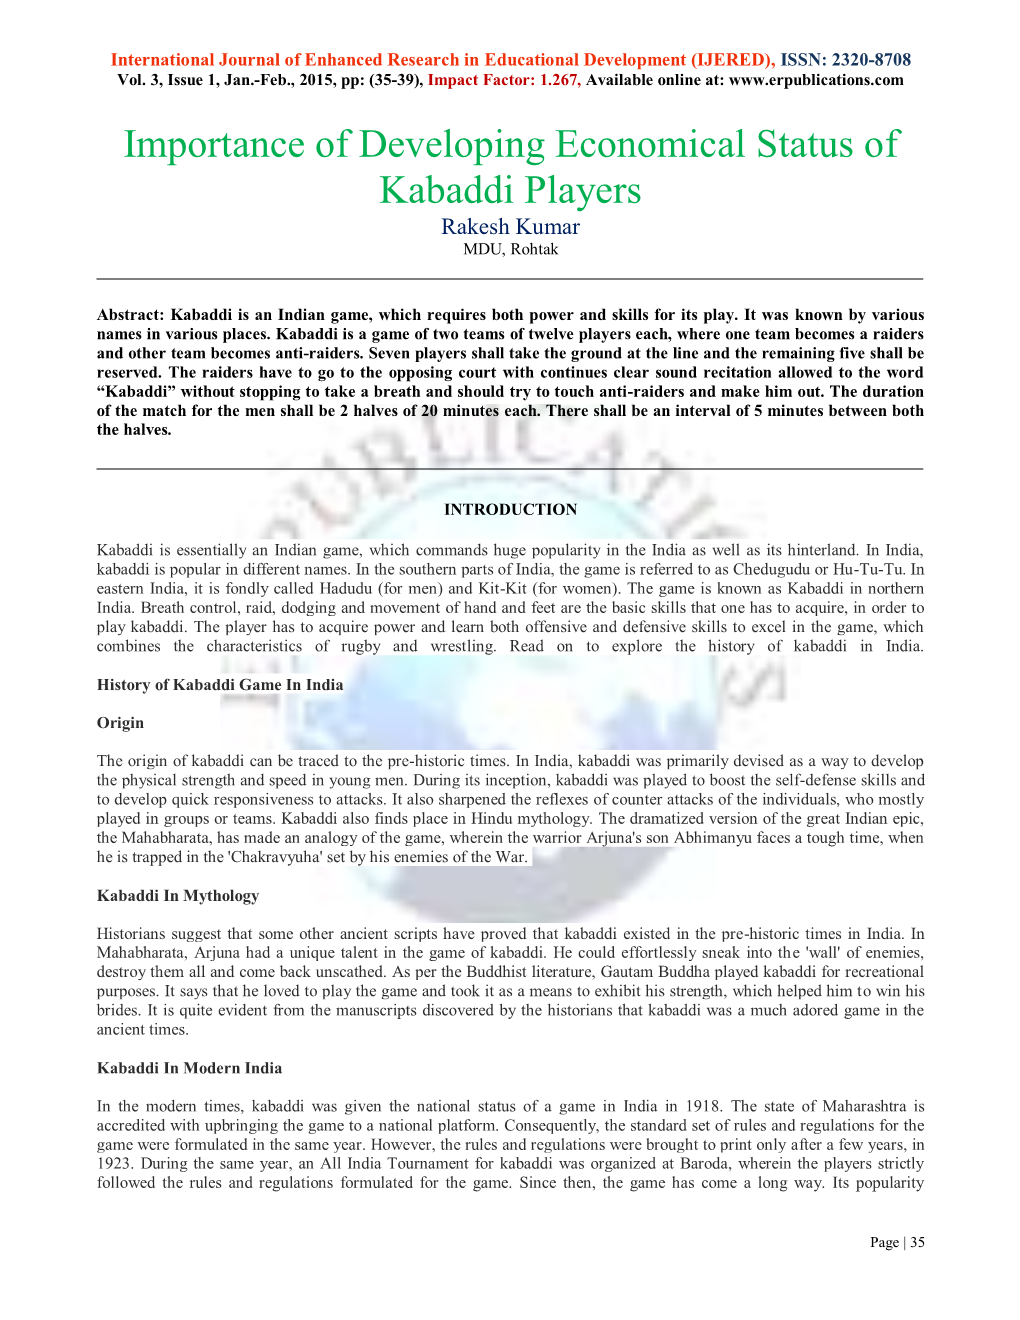 Importance of Developing Economical Status of Kabaddi Players Rakesh Kumar MDU, Rohtak